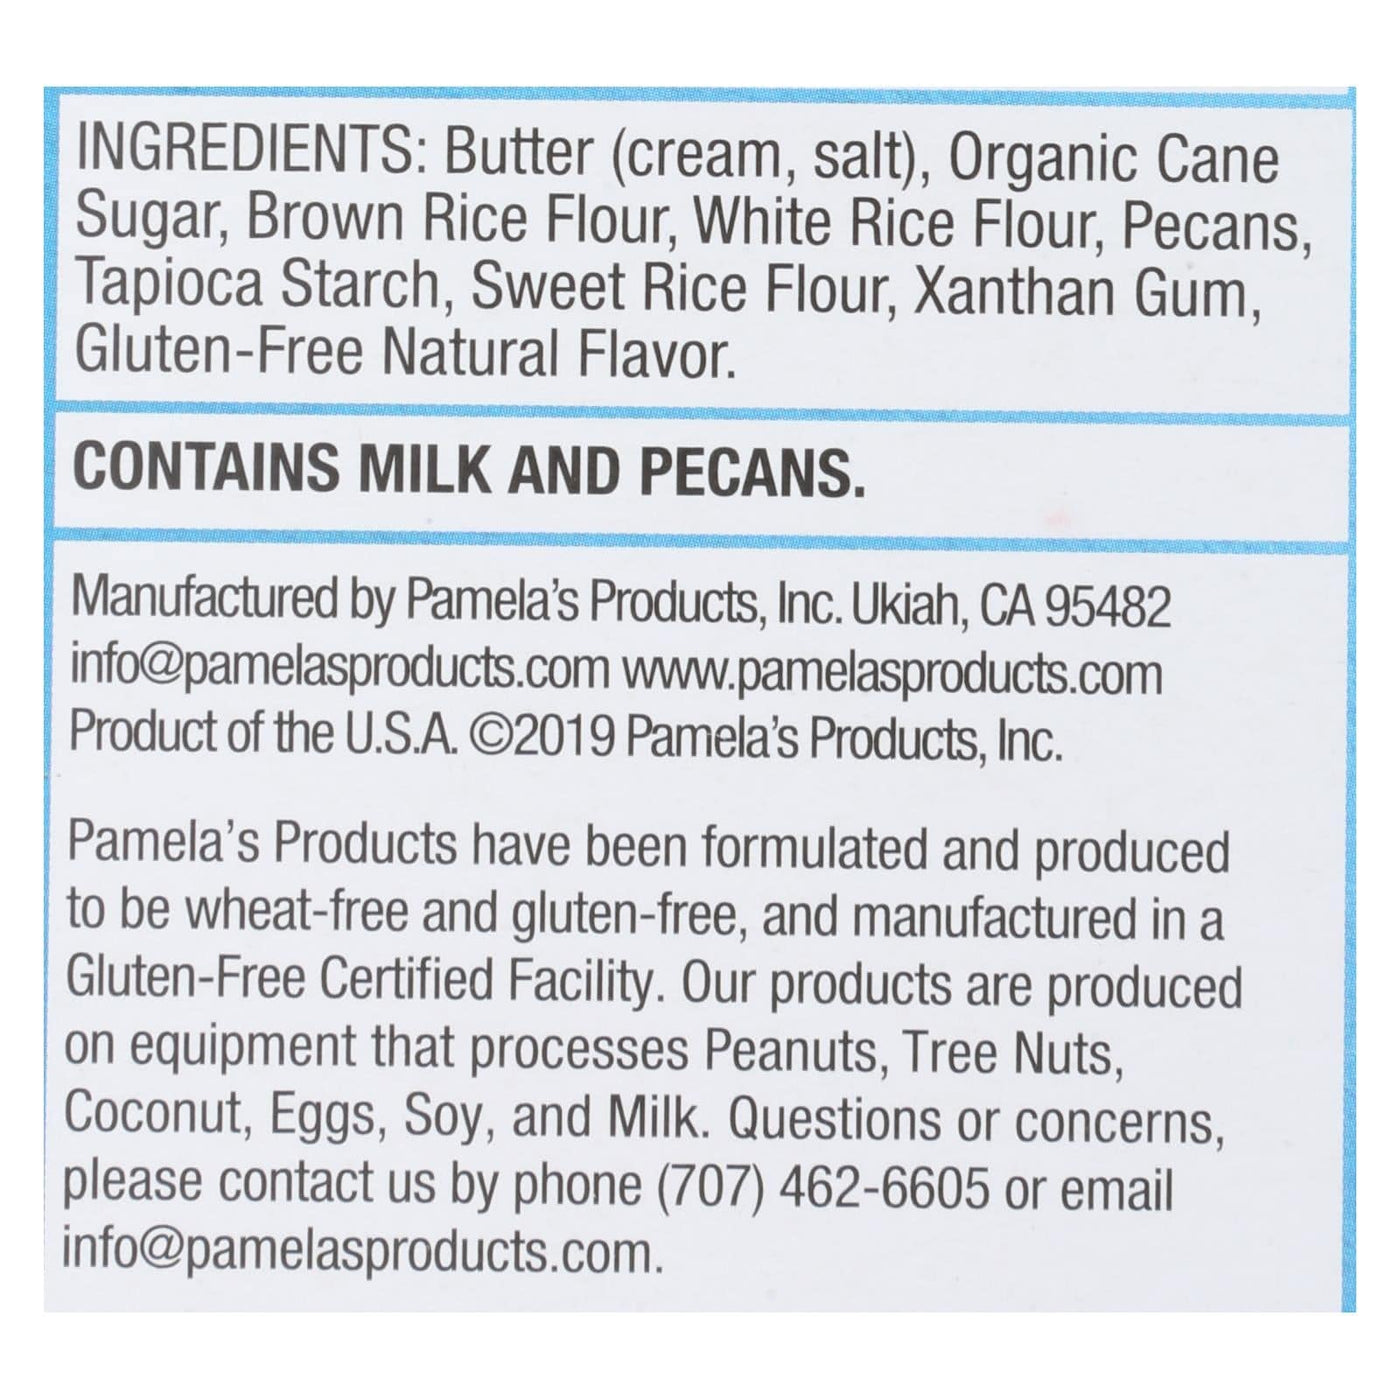 Pamela's Products - Cookies - Pecan Shortbread - Gluten-free - Case Of 6 - 6.25 Oz. | OnlyNaturals.us